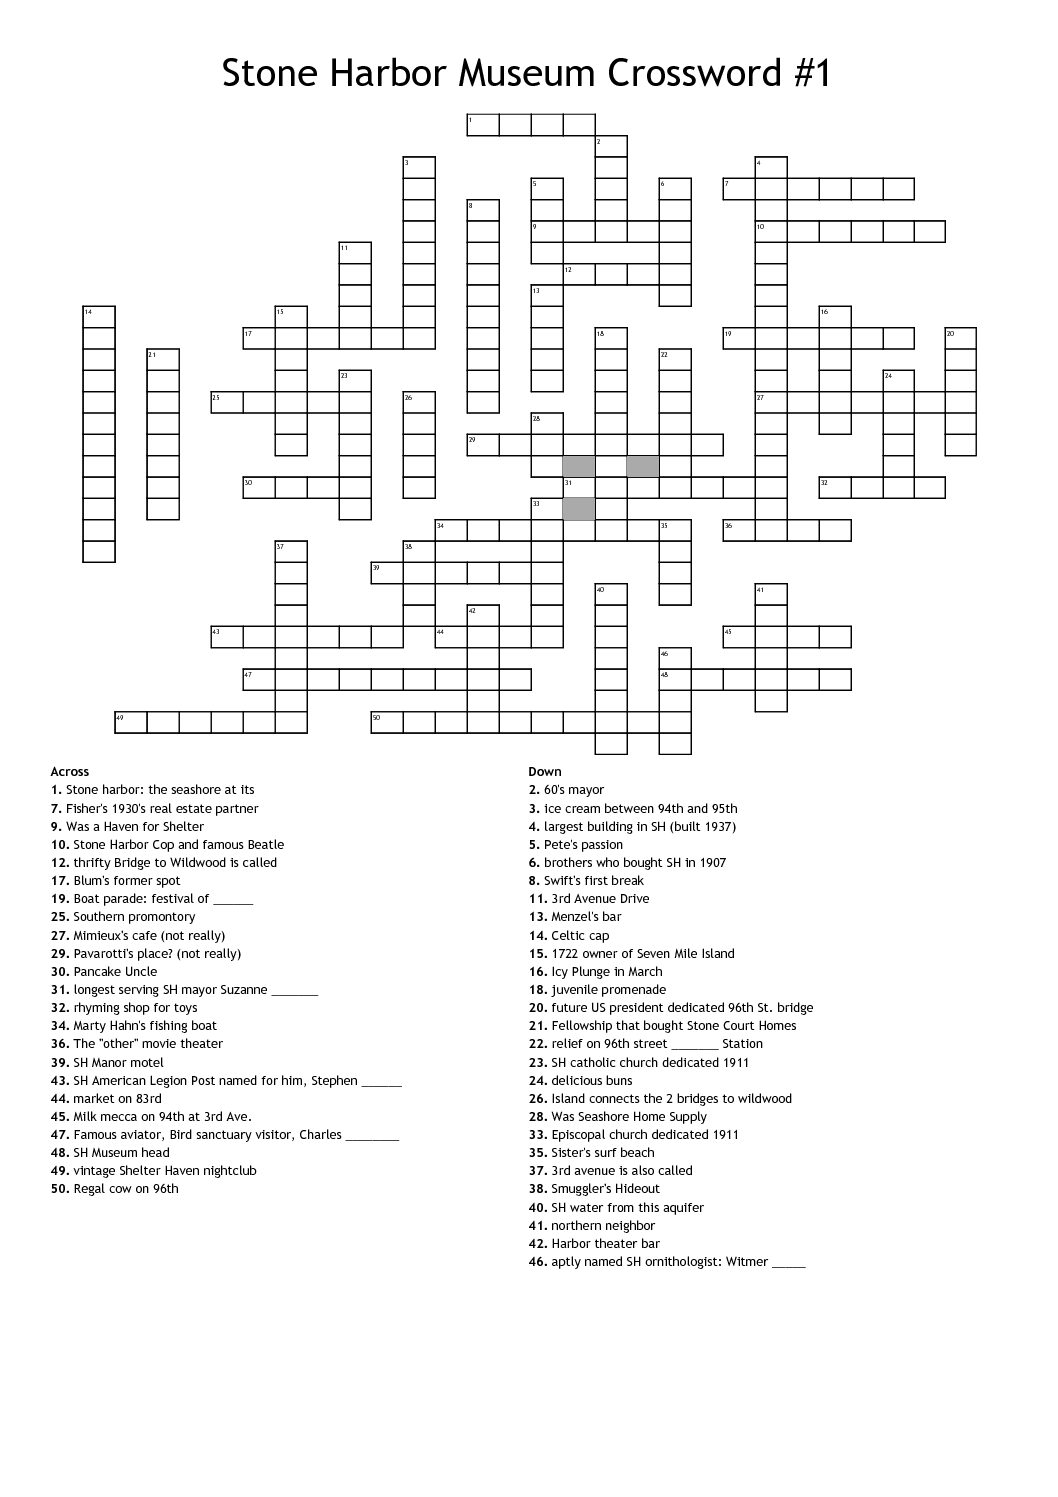 guided museum trip crossword